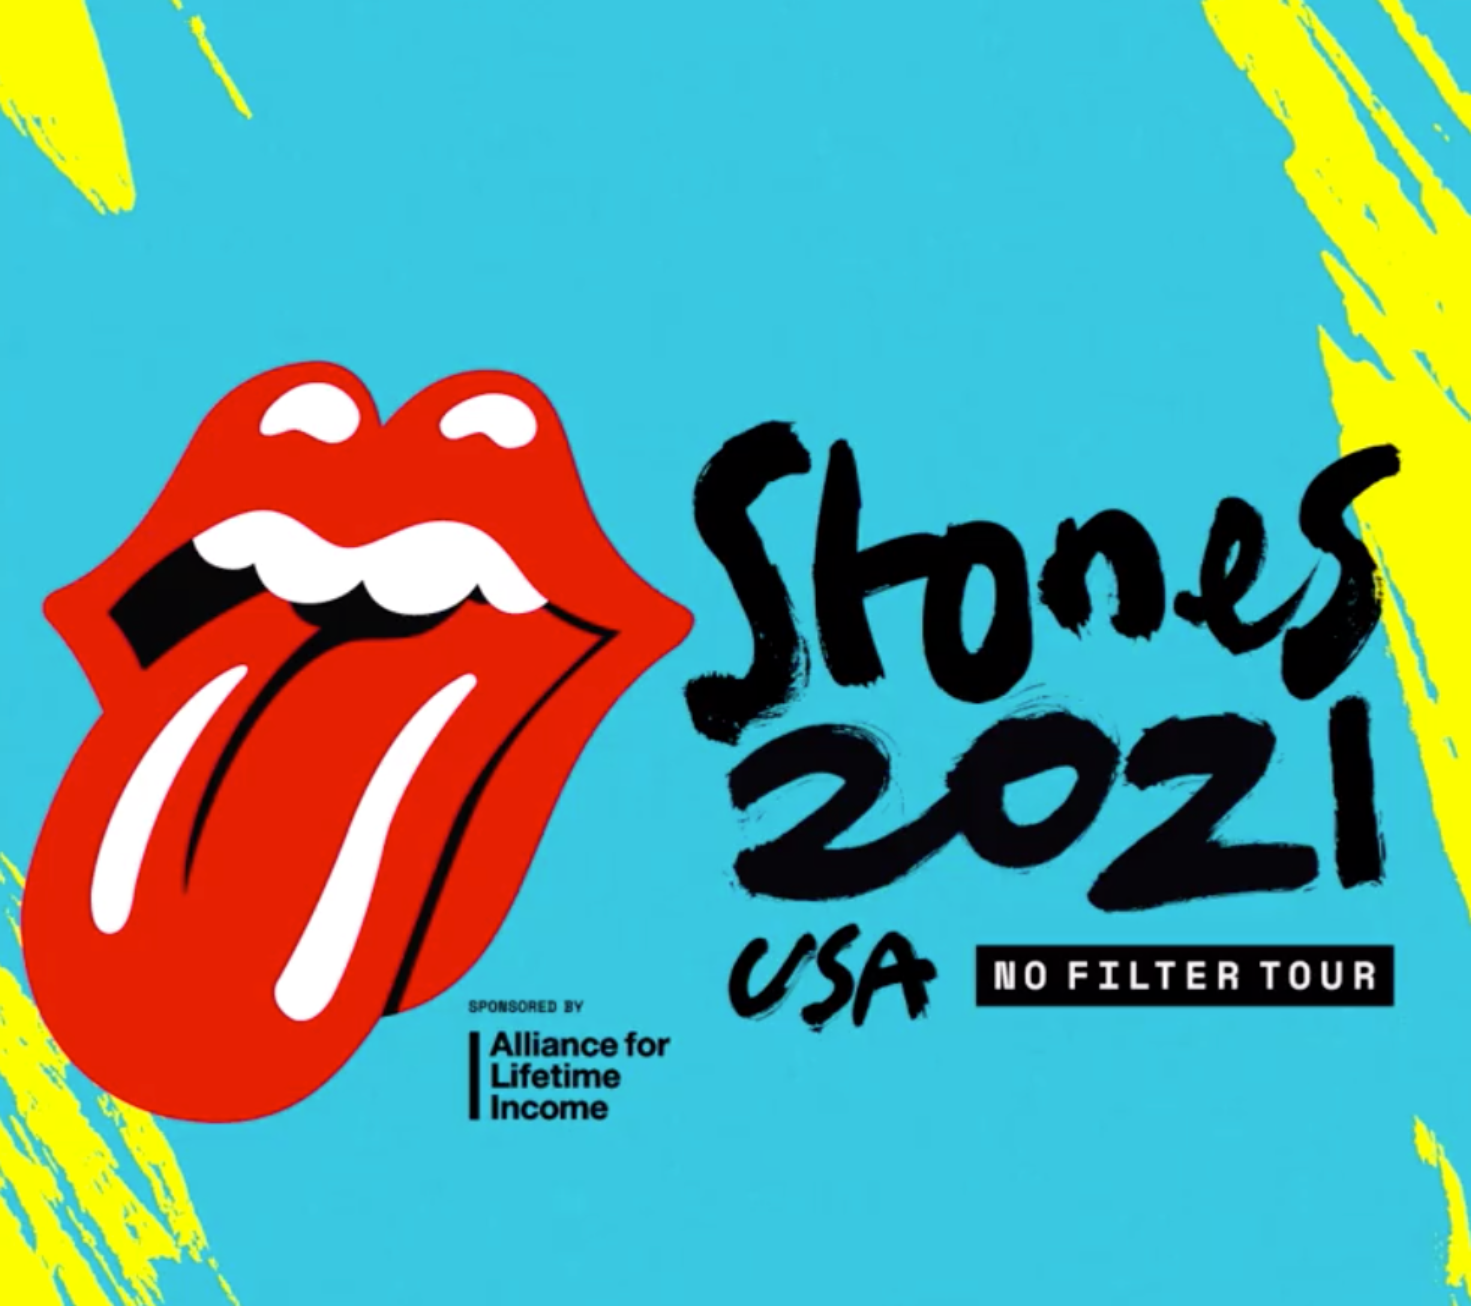 ROLLING STONES US 2021 TOUR ANNOUNCEMENT Music Recall Magazine